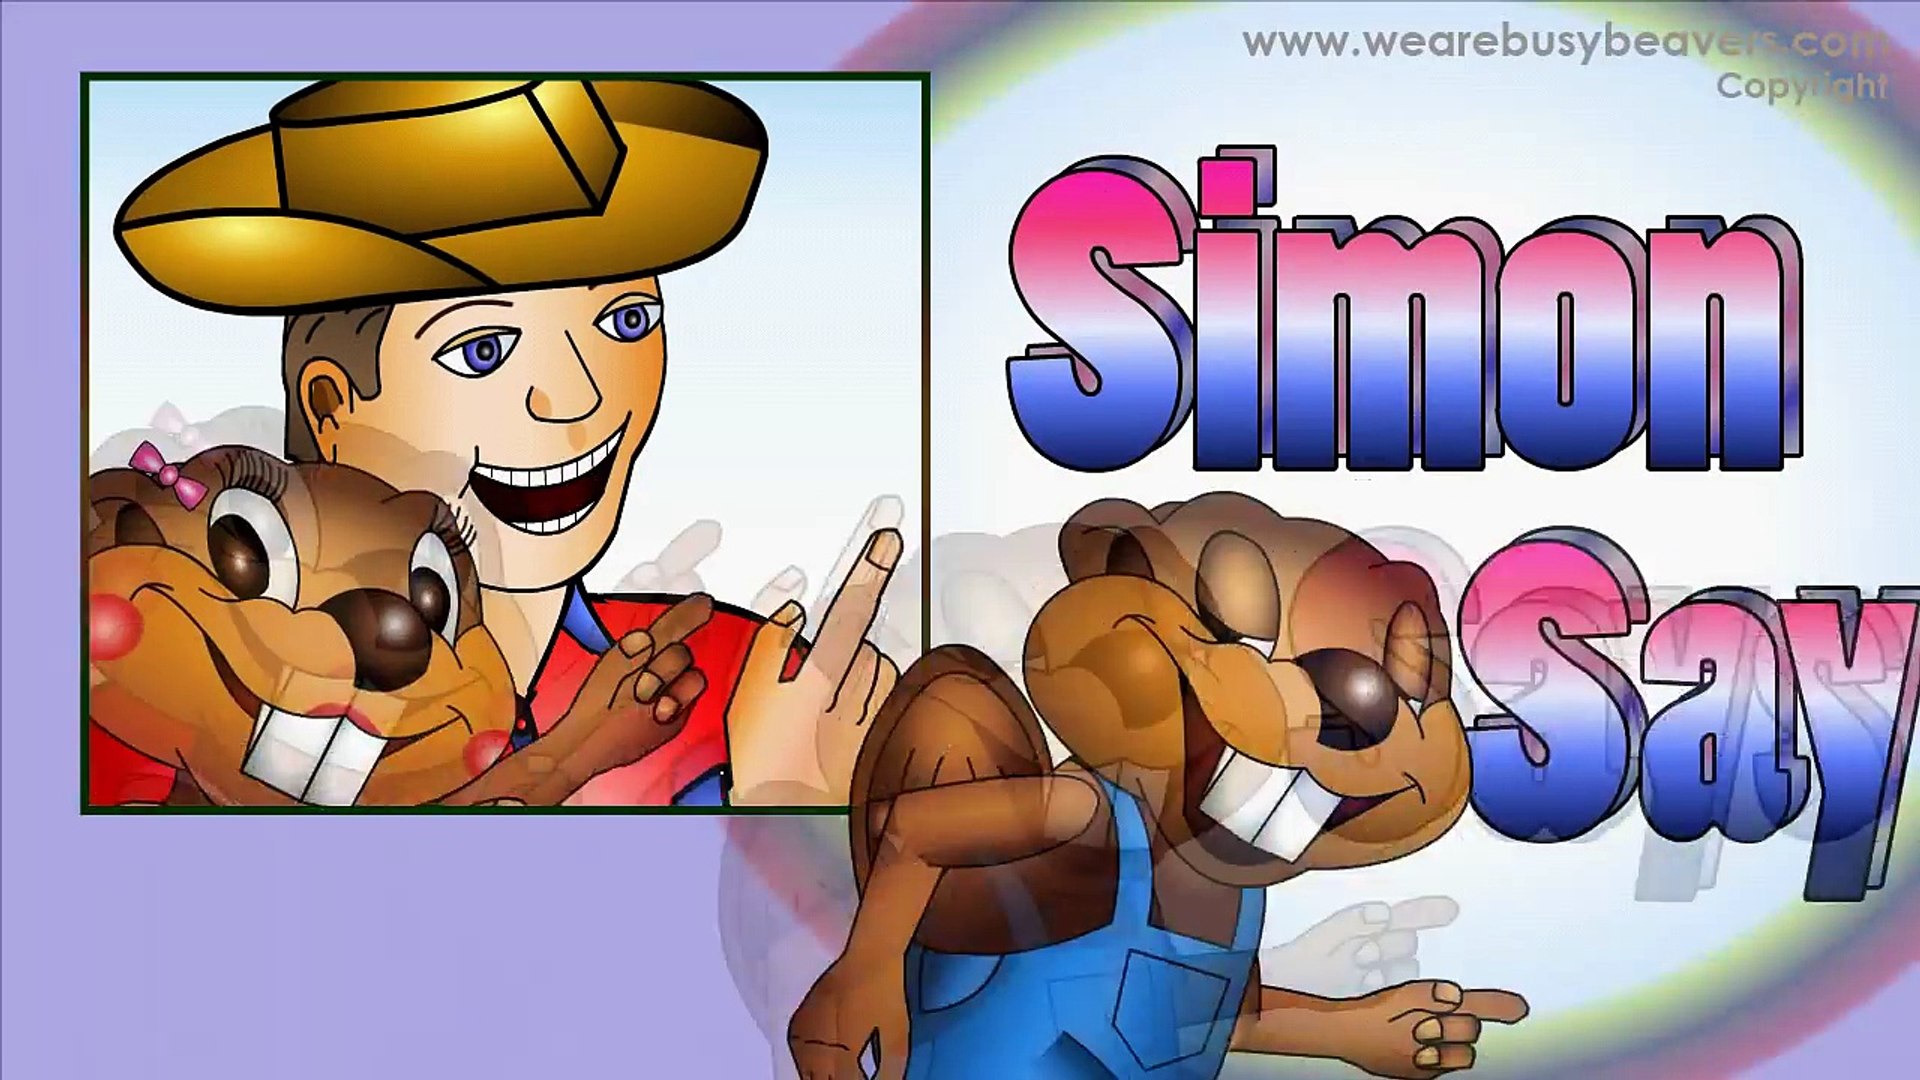 Watch Simon Says Music Game, The Kiboomers